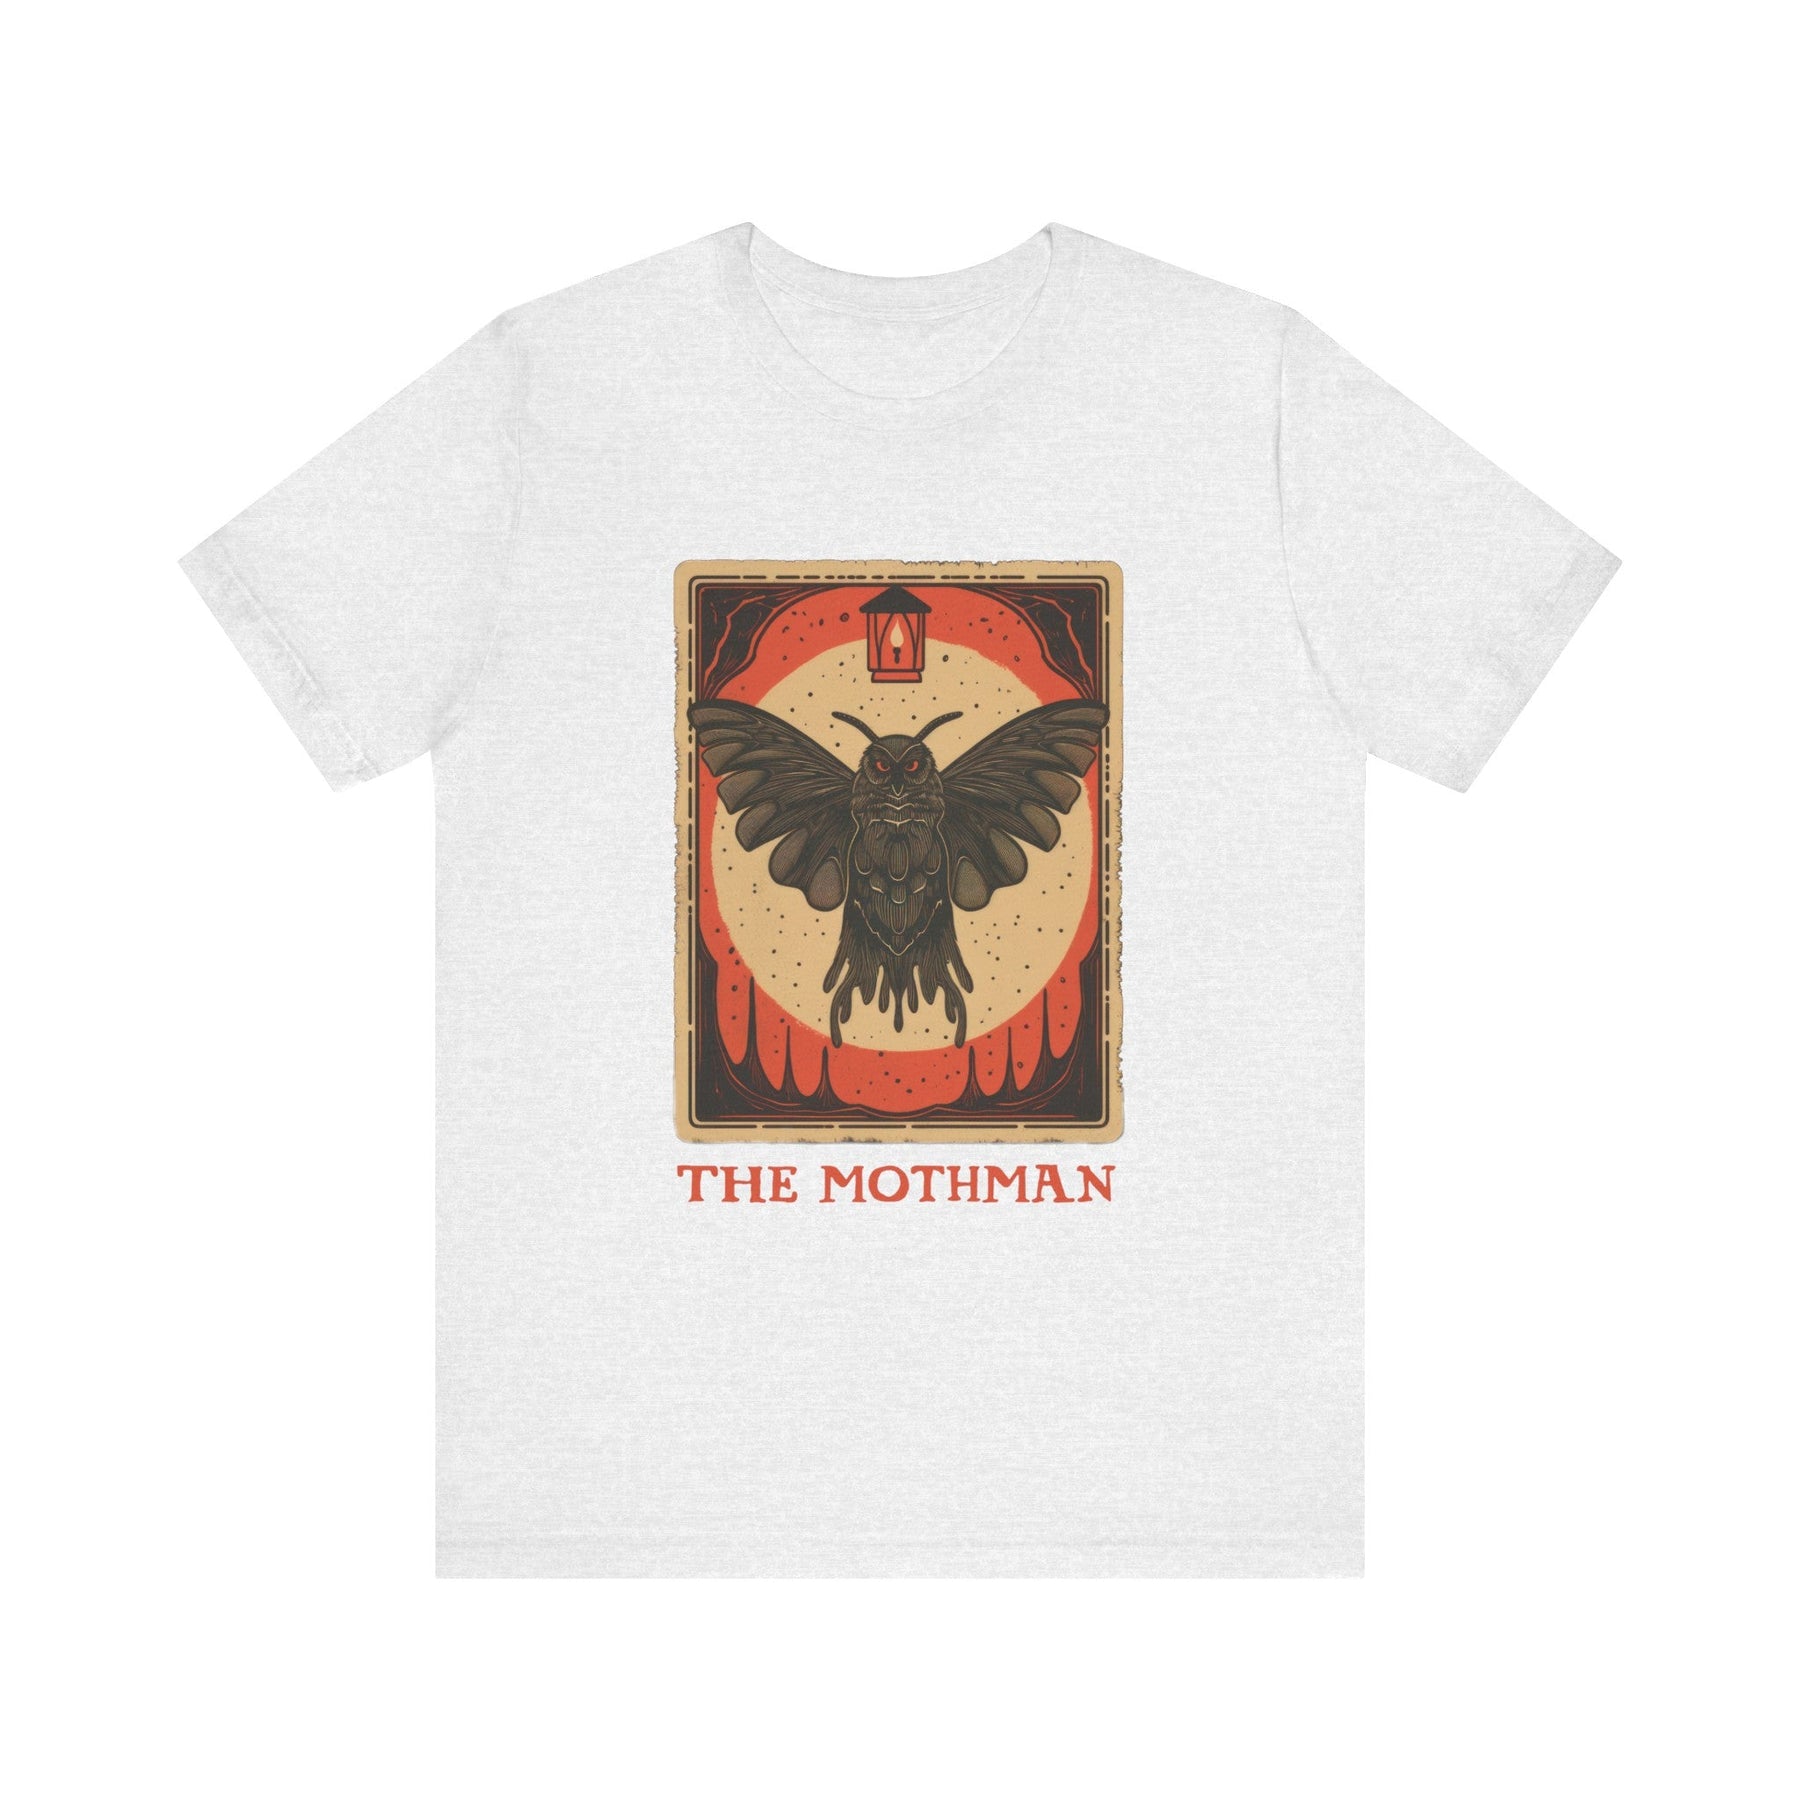 Mothman Tarot Card T - Shirt - Goth Cloth Co.T - Shirt27802824001509840928